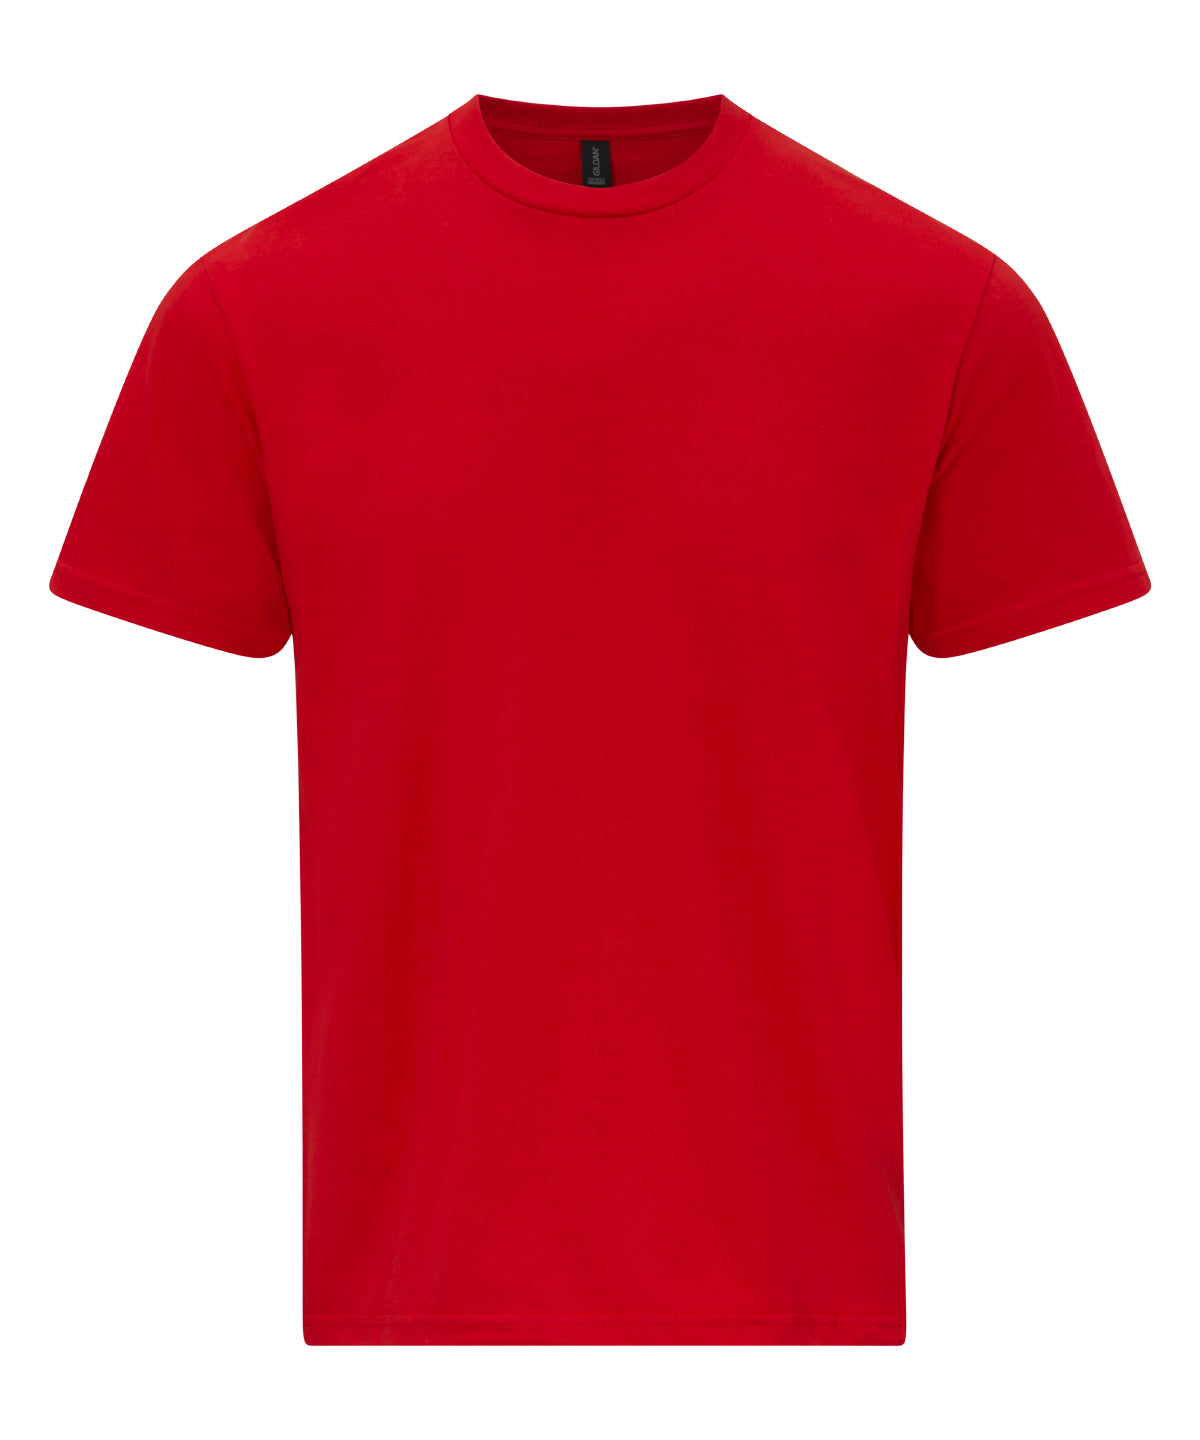 Personalised T-Shirts - Mid Yellow Gildan Softstyle™ midweight adult t-shirt